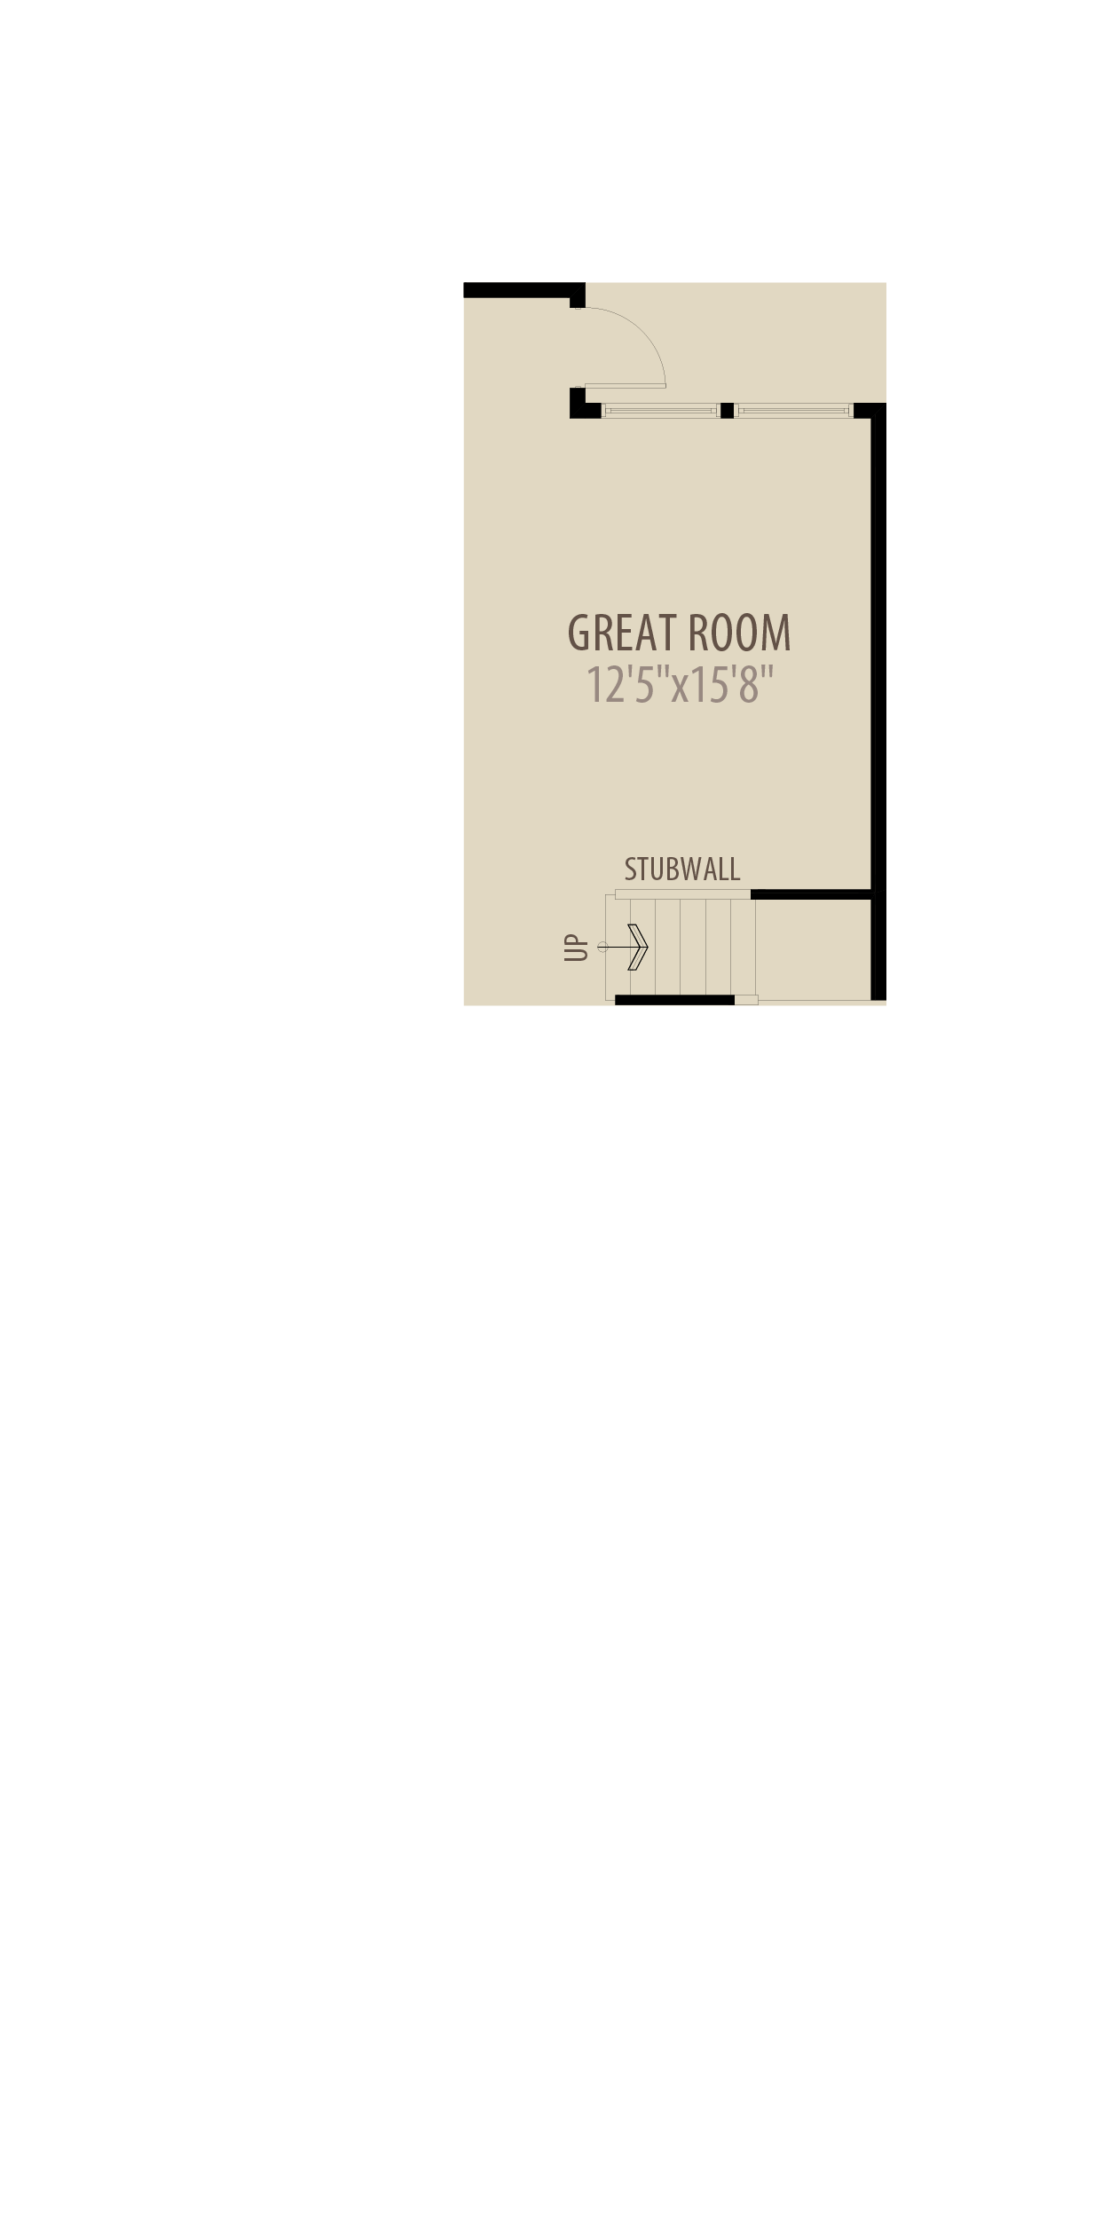 Wexford III Floorplans 141222 Option 6 Extended Great Room and Bonus Room adds 40 sq ft